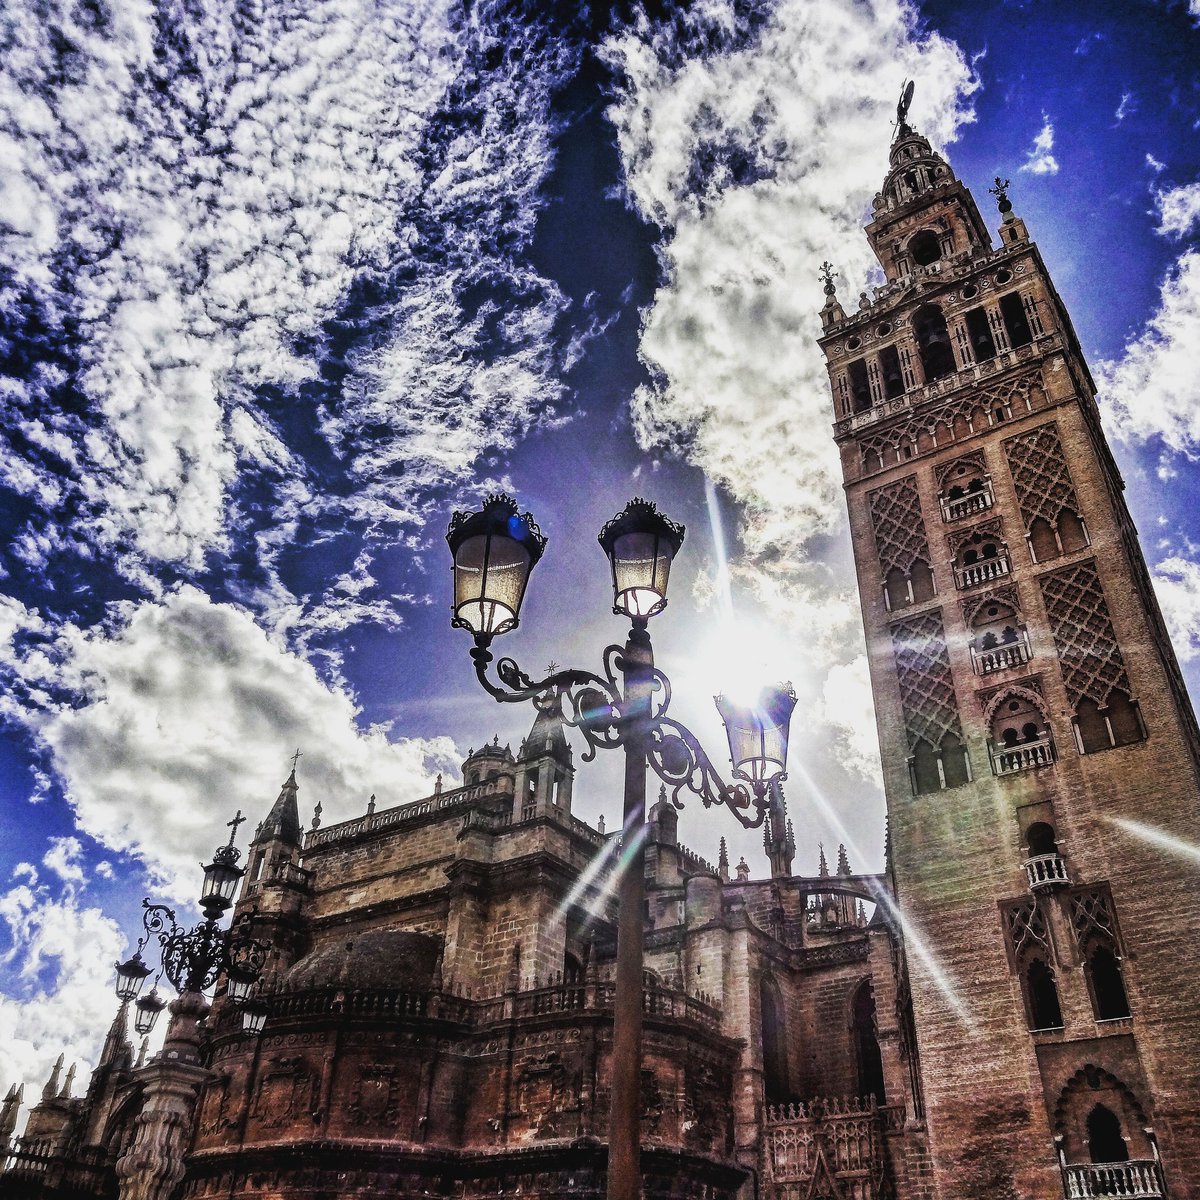 Revisiting some old favorites... #fromthearchives #lagiralda #belltower #sevilla #spain #artofspain #spanisharchitecture #spanishskies #monumentsandskies #travelphotography #travel #churches #cathedrals #monuments #photography #skydrama #travelgram #seville